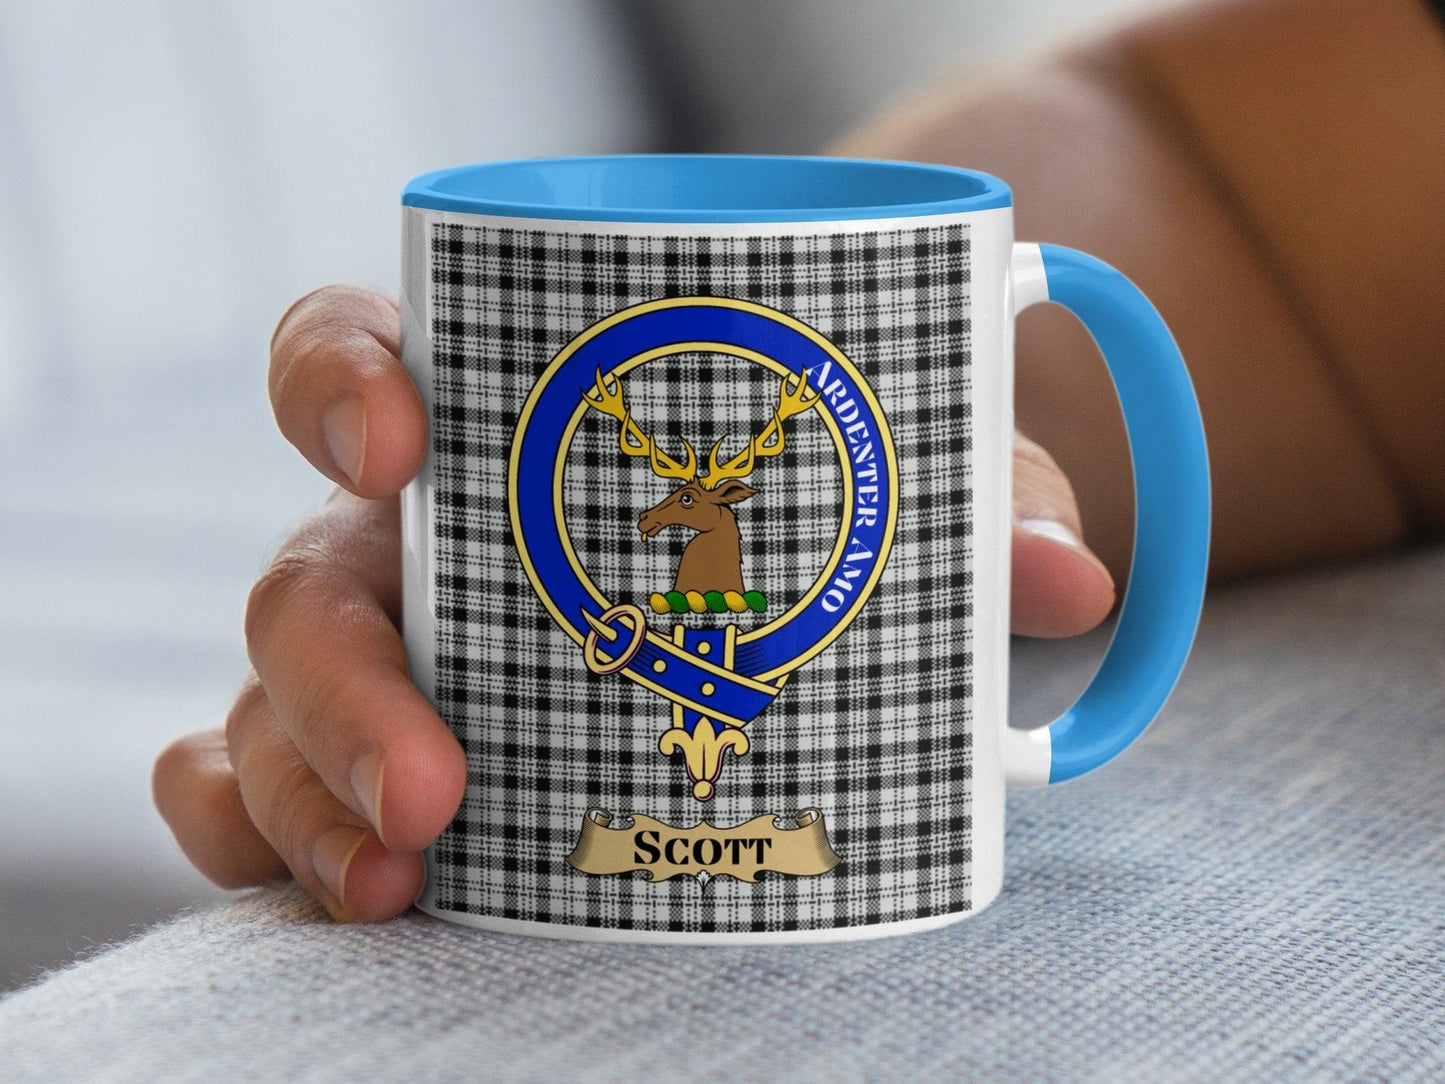 Scott Clan Scottish Crest Tartan Heritage Emblem Mug - Living Stone Gifts